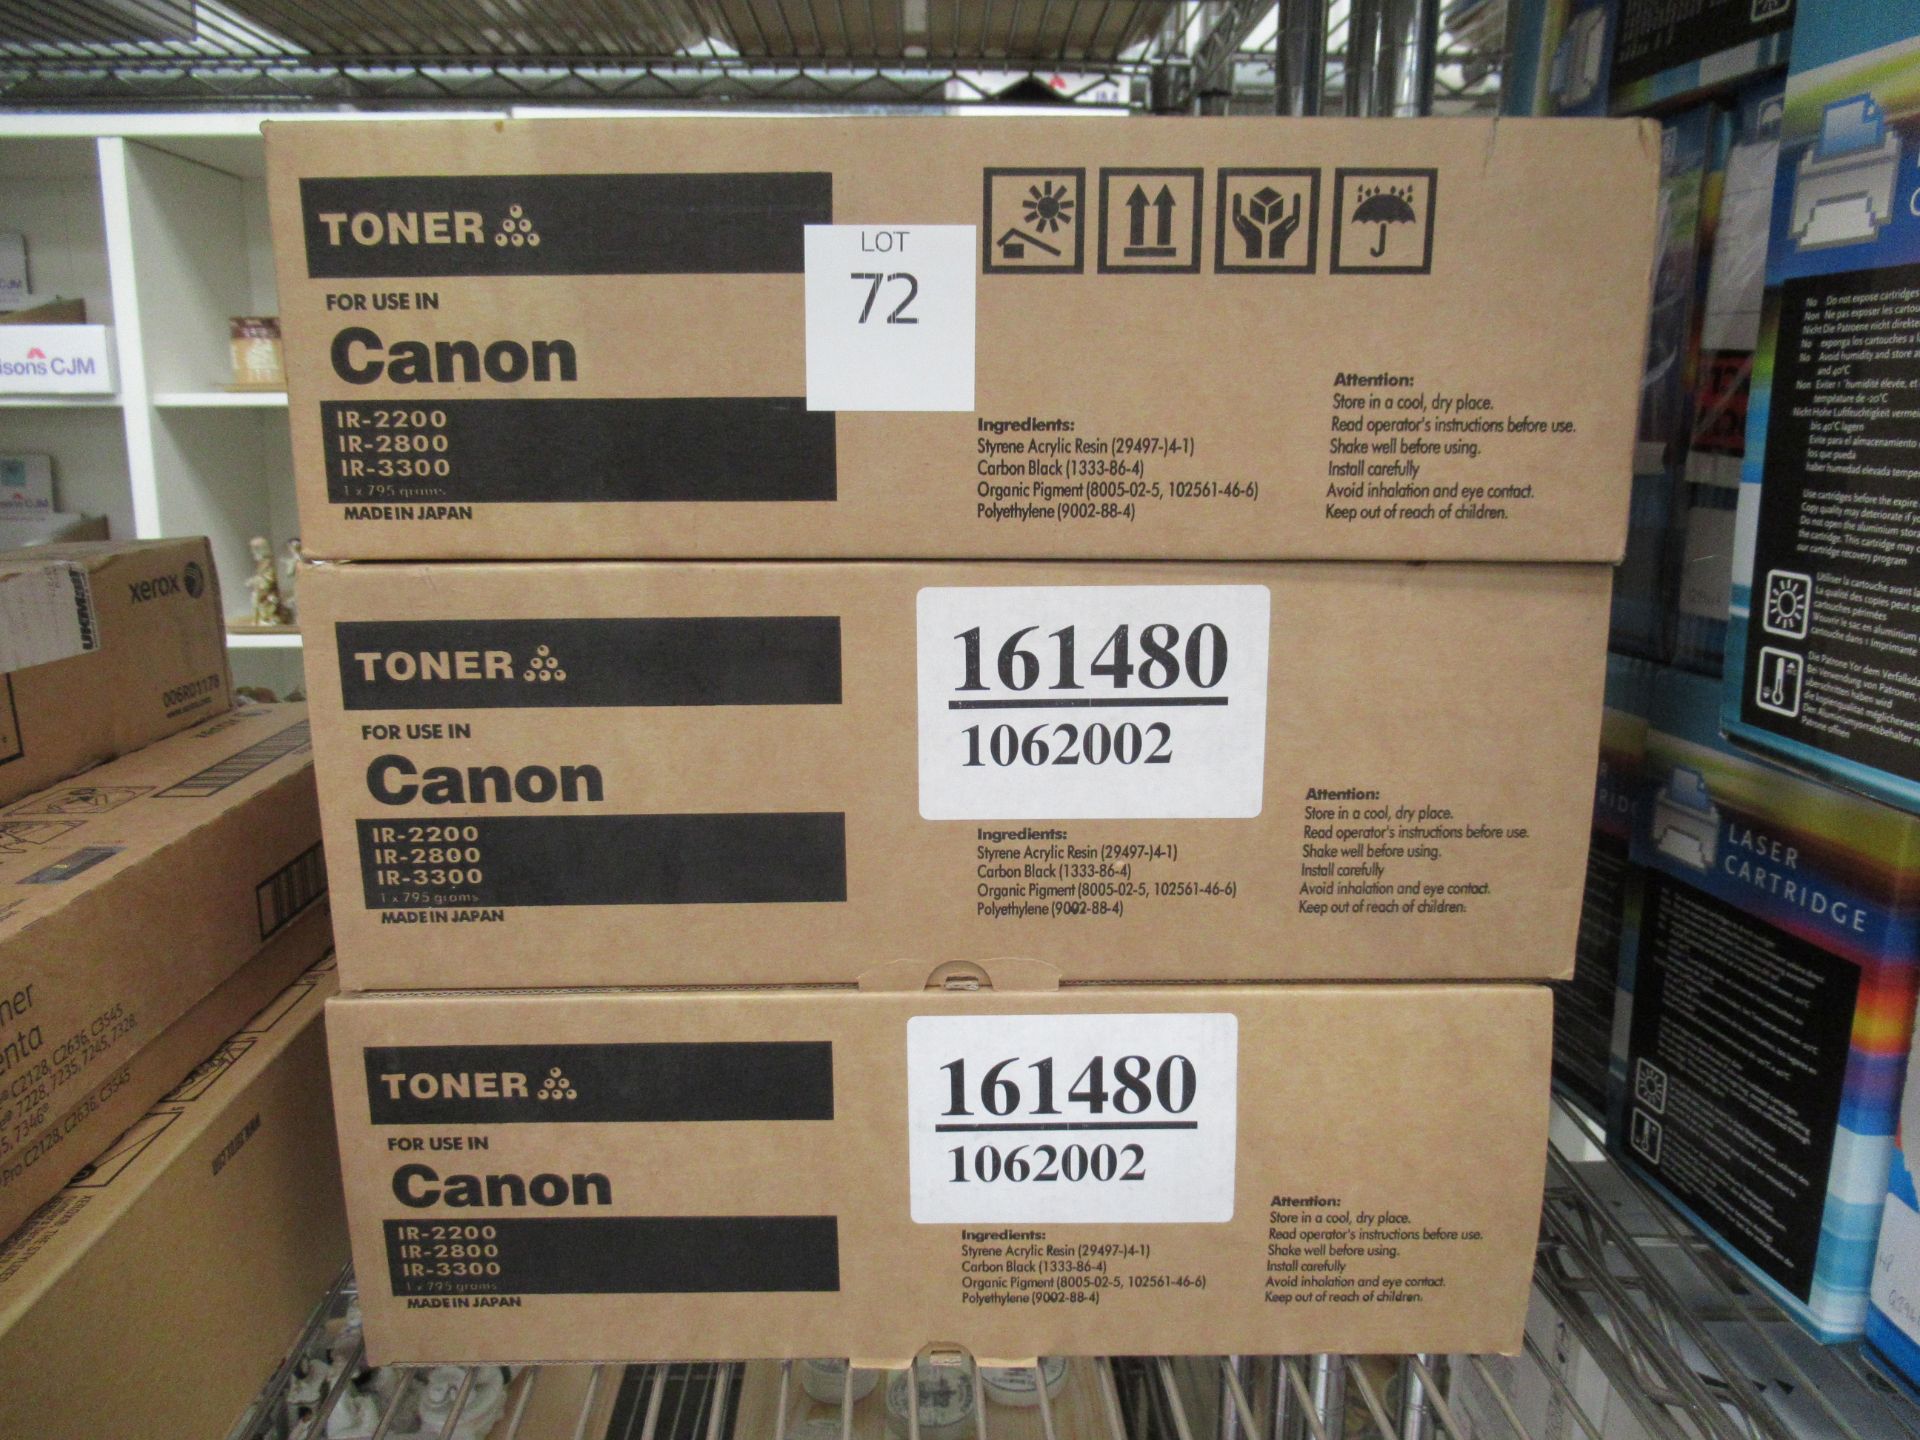 6 Canon 161480 toner cartridges